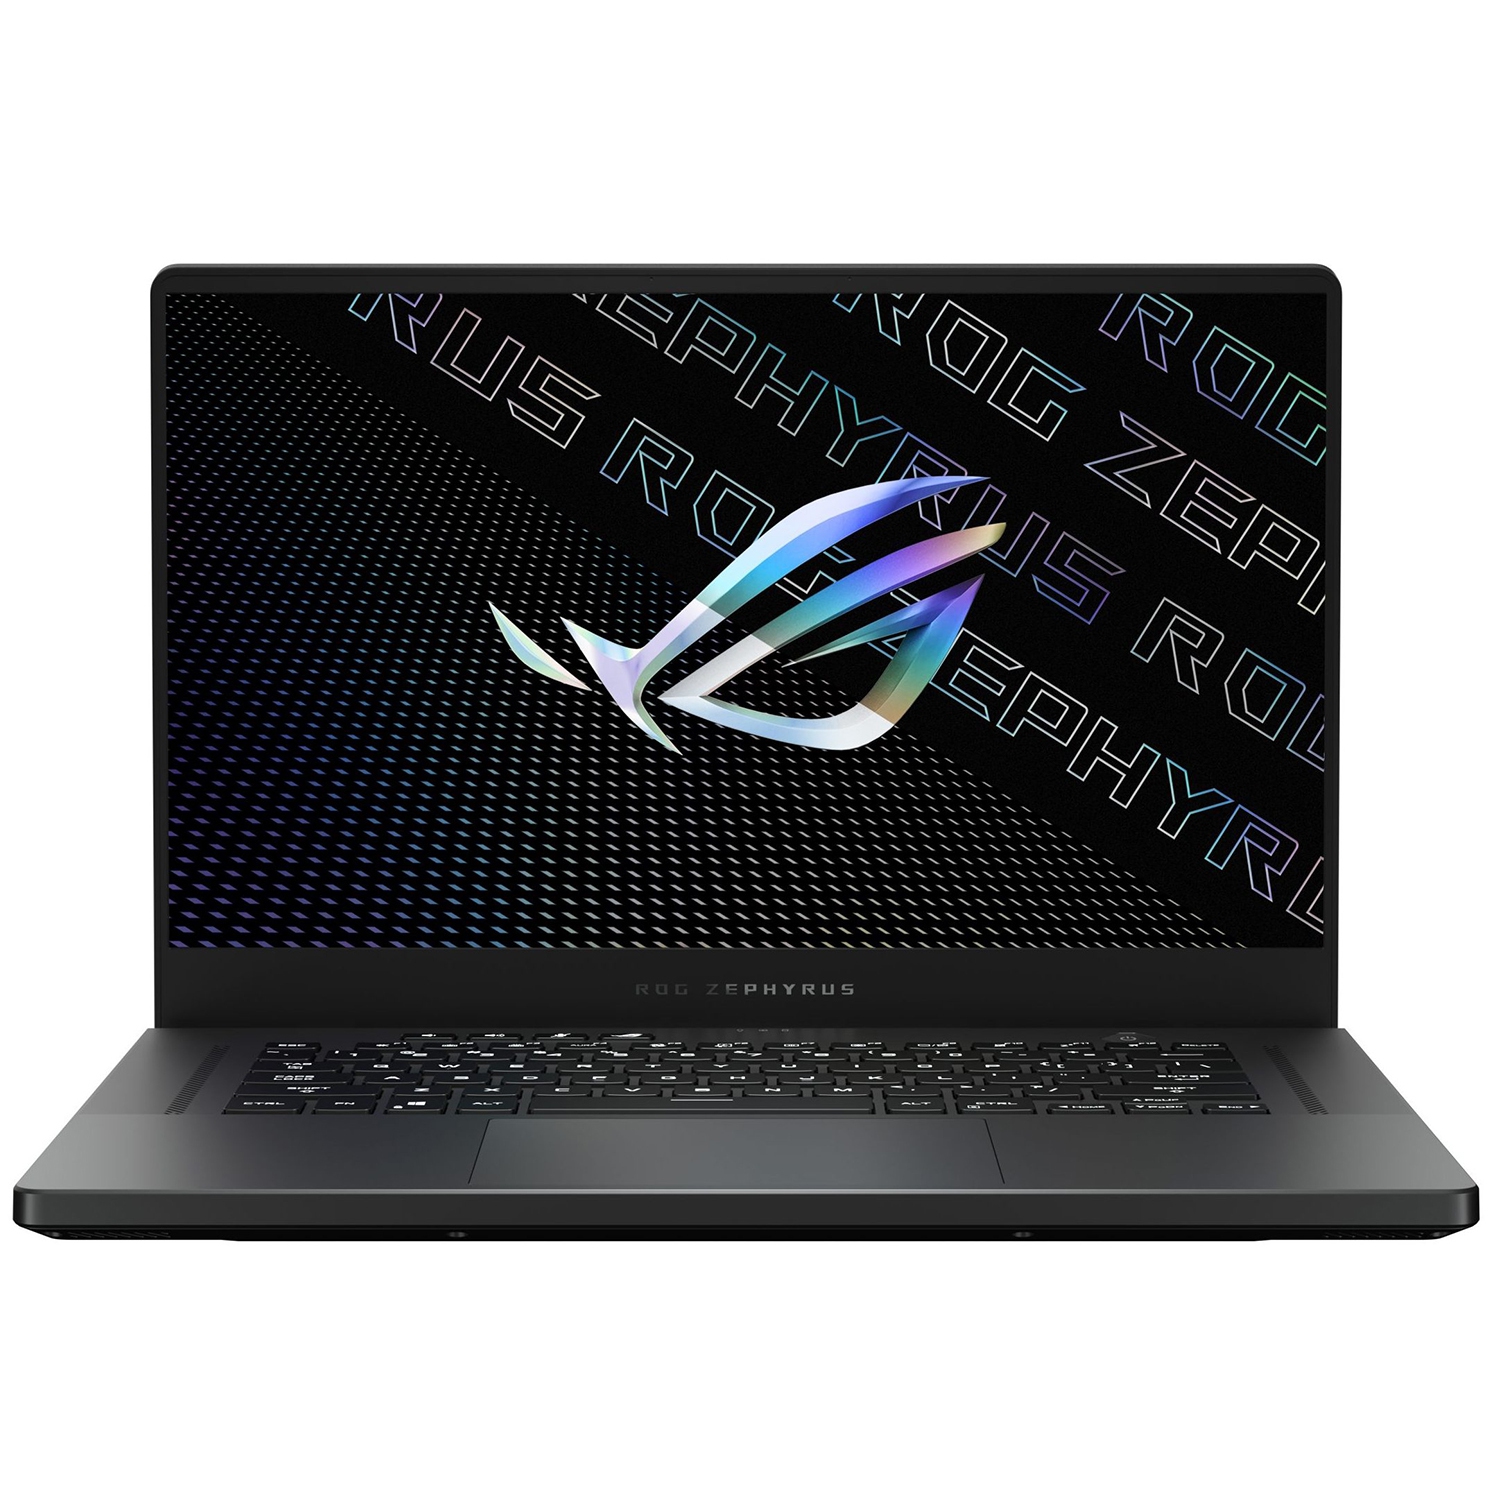 Custom ASUS ROG Zephyrus G15 Laptop (AMD Ryzen 9 5900HS, 24GB RAM, 2TB PCIe SSD, NVIDIA RTX 3060, Win 10 Home)